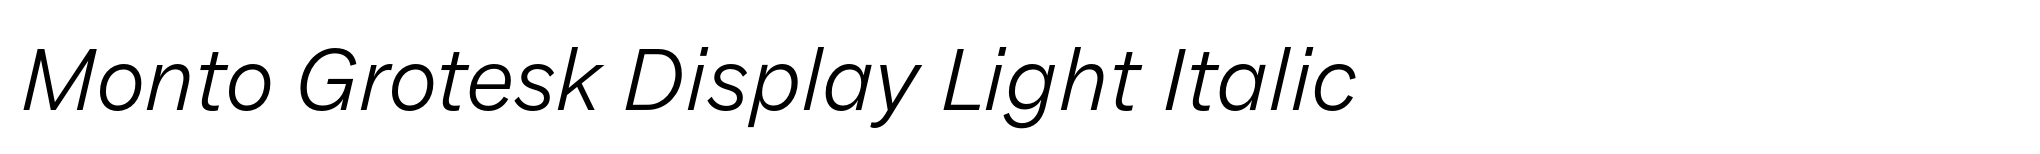 Monto Grotesk Display Light Italic image